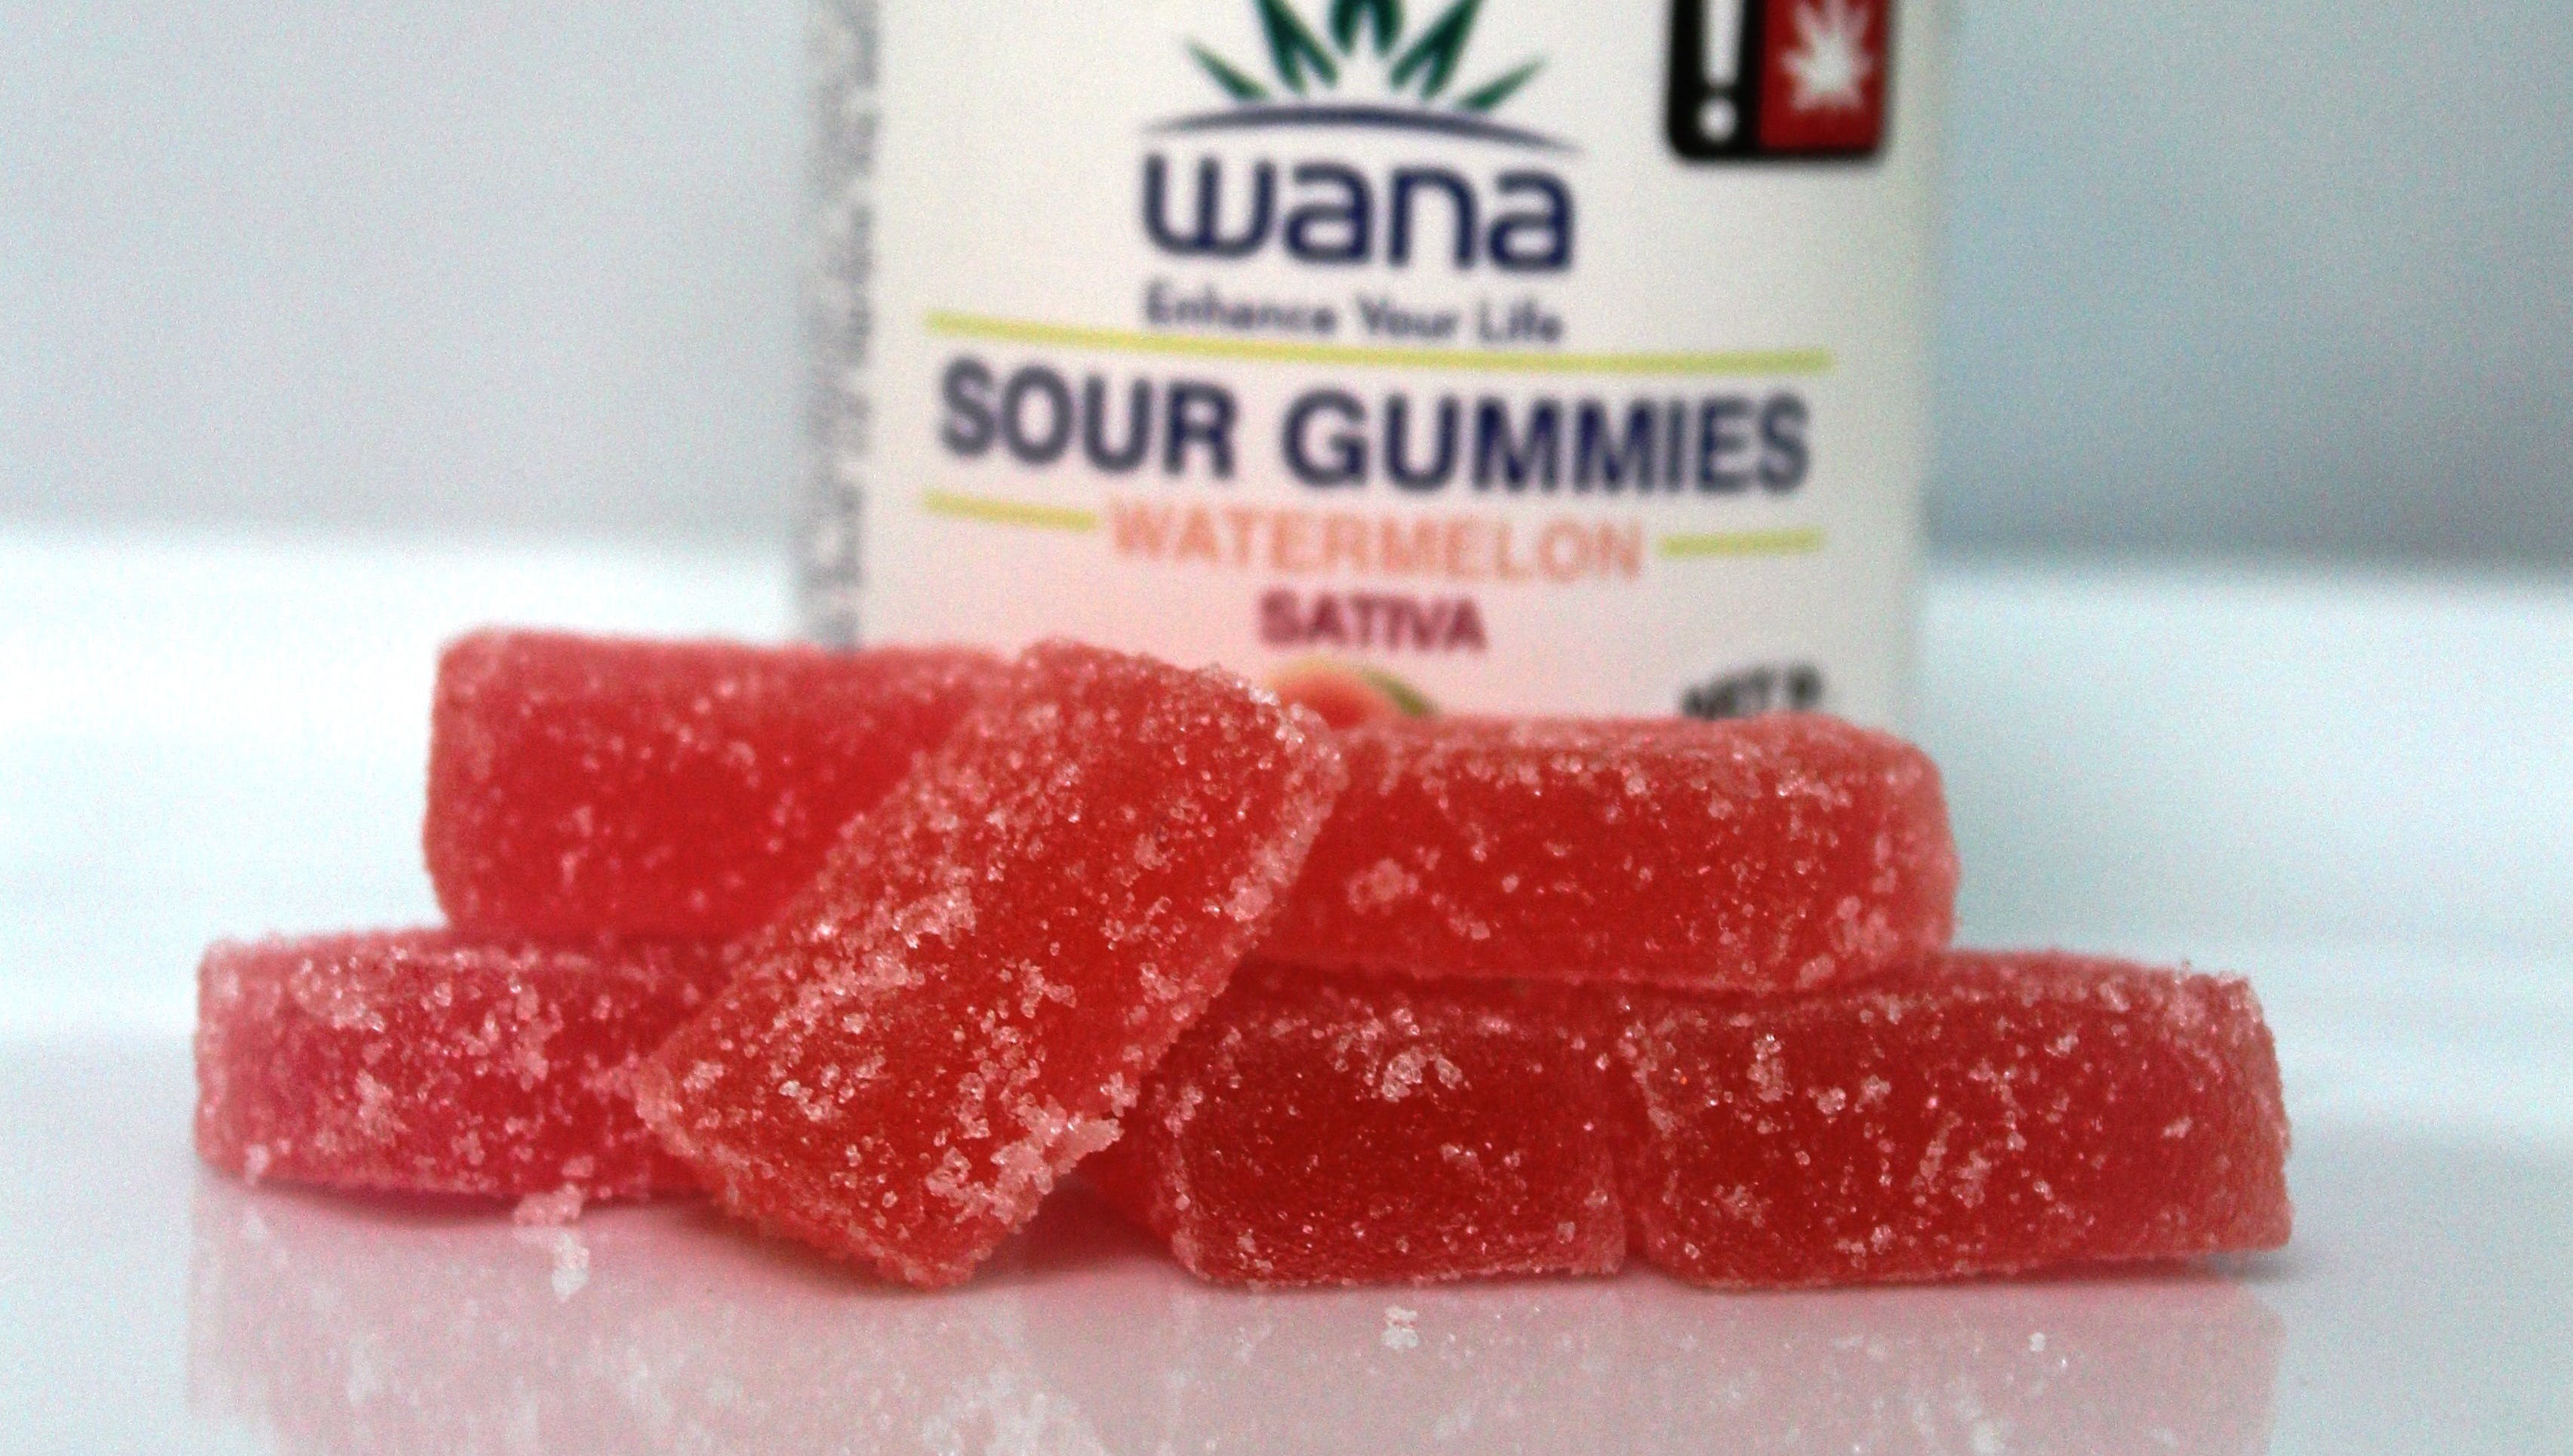 edible-sour-watermelon-s-gummies-50mg-thc-wana